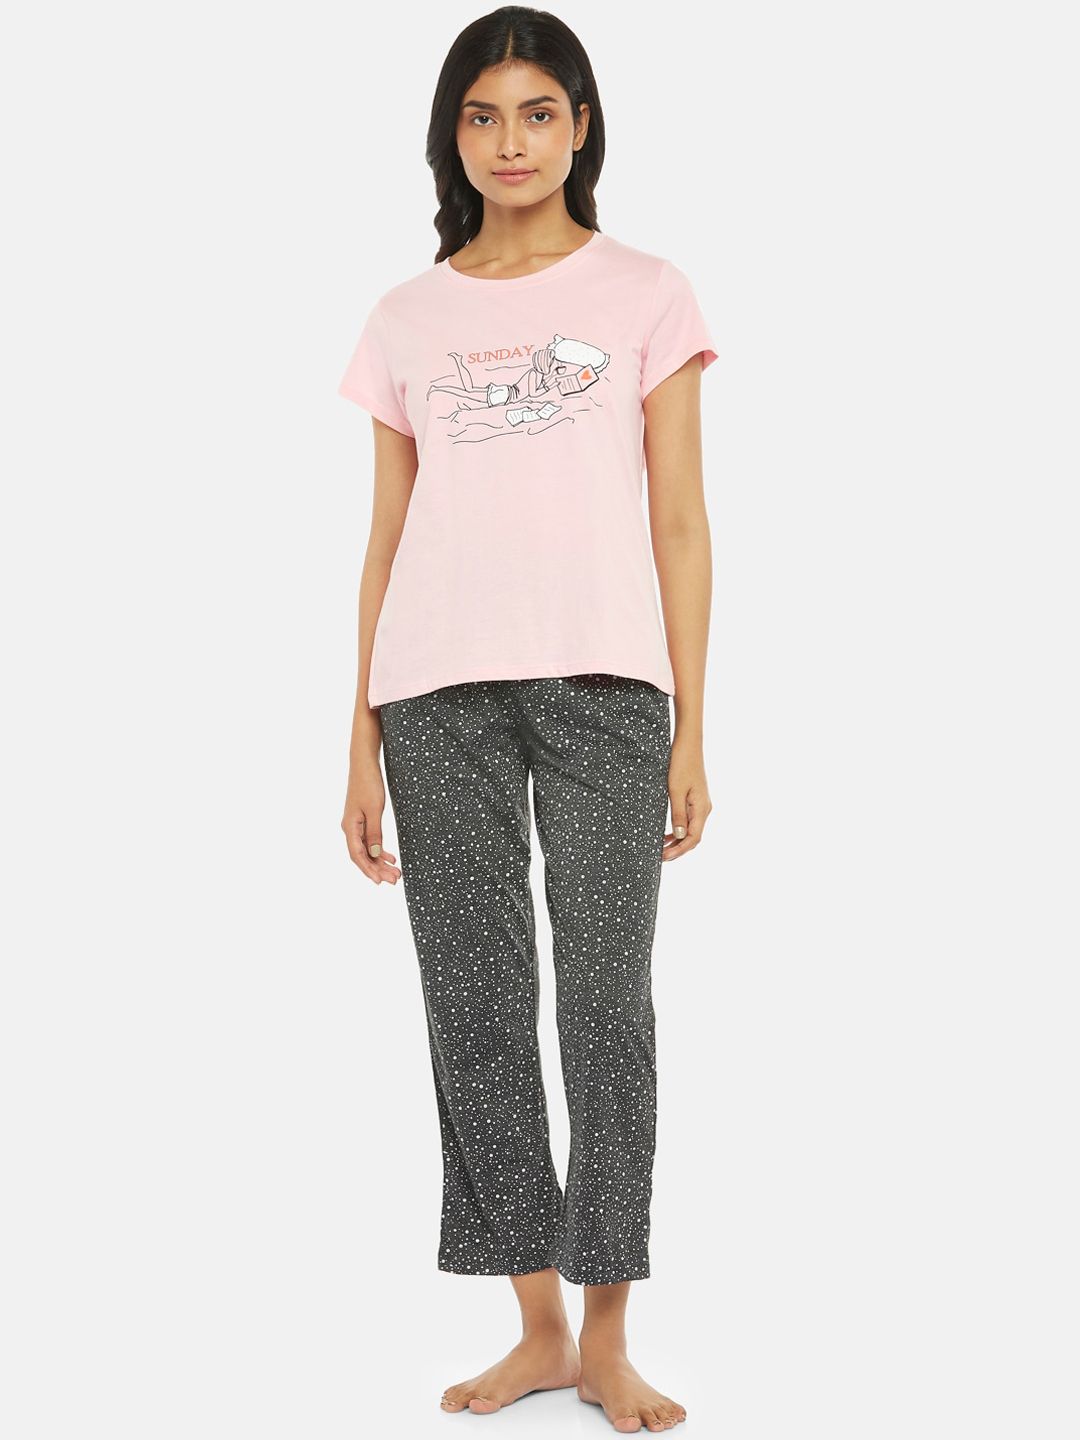 Dreamz by Pantaloons Women Pink & Black Printed Night suit Price in India